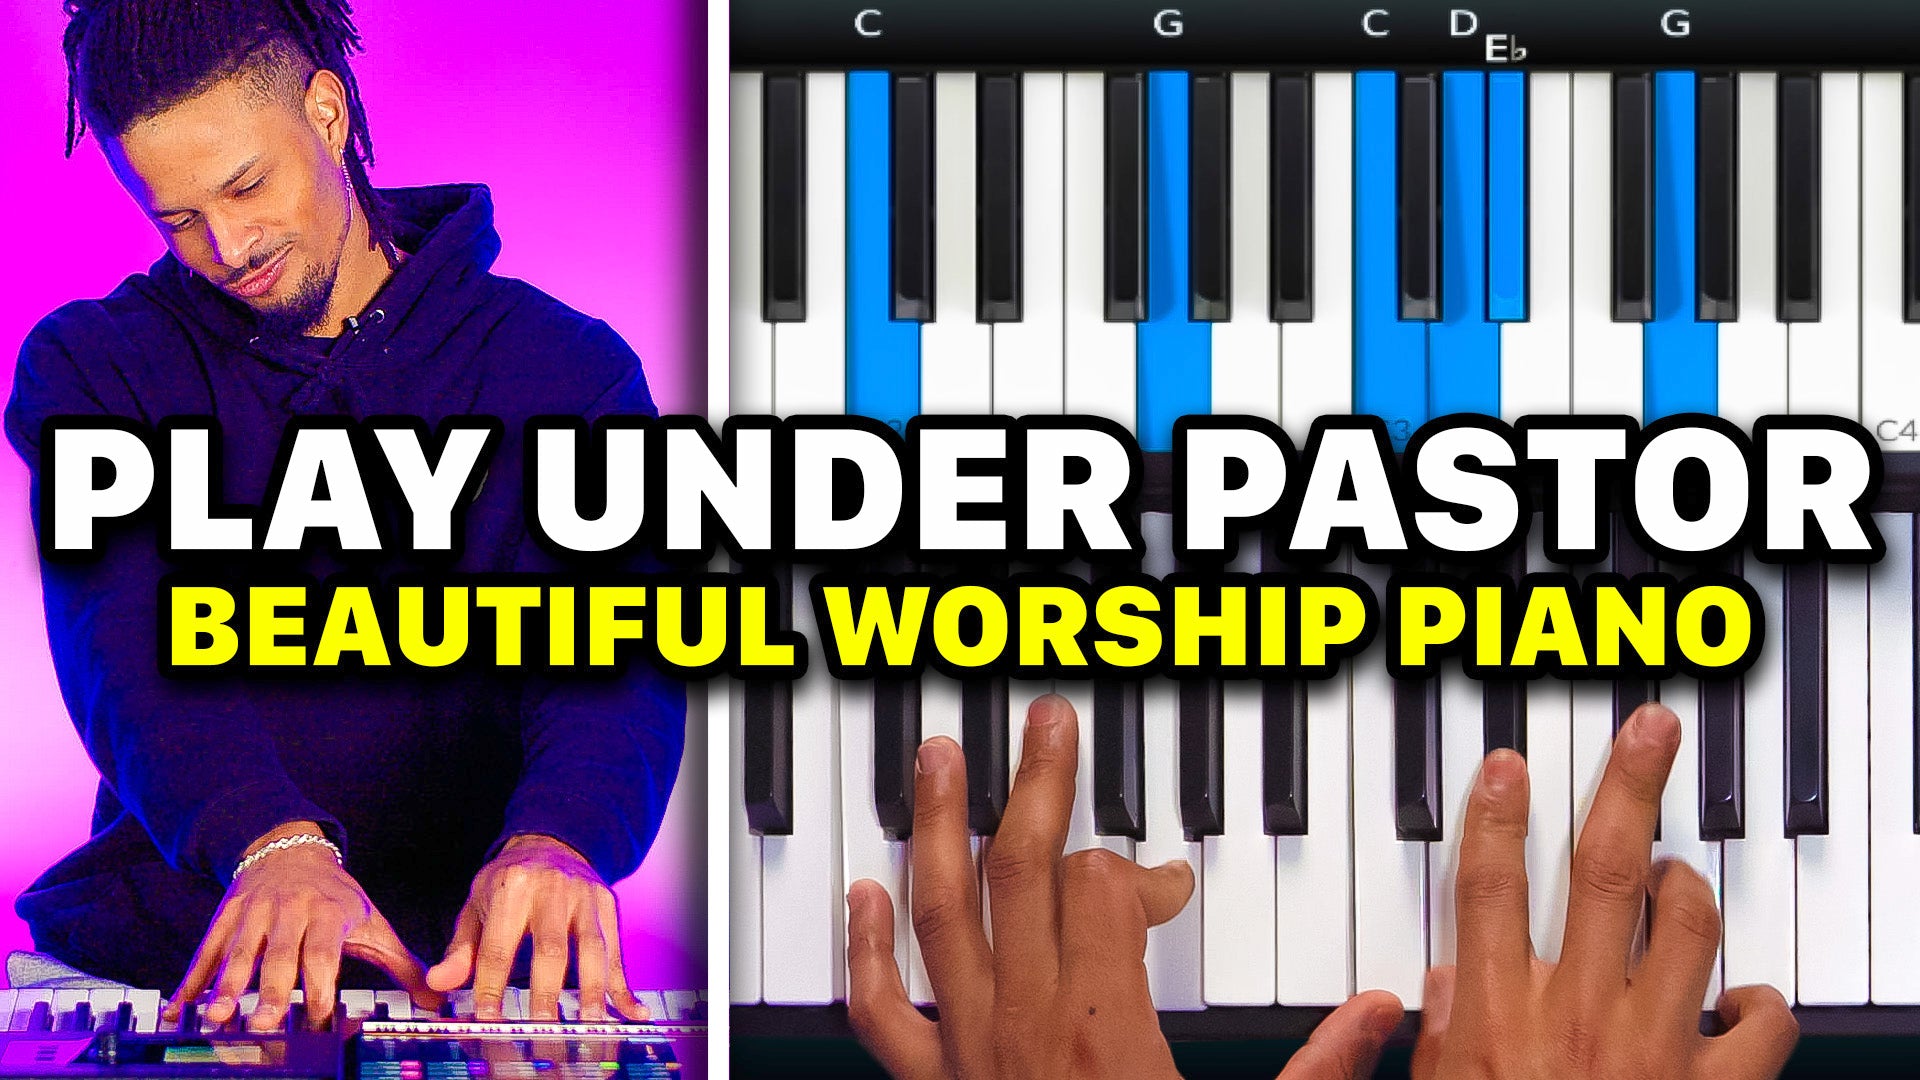 Play Under Pastor - Beautiful, Emotional Worship Piano Sounds